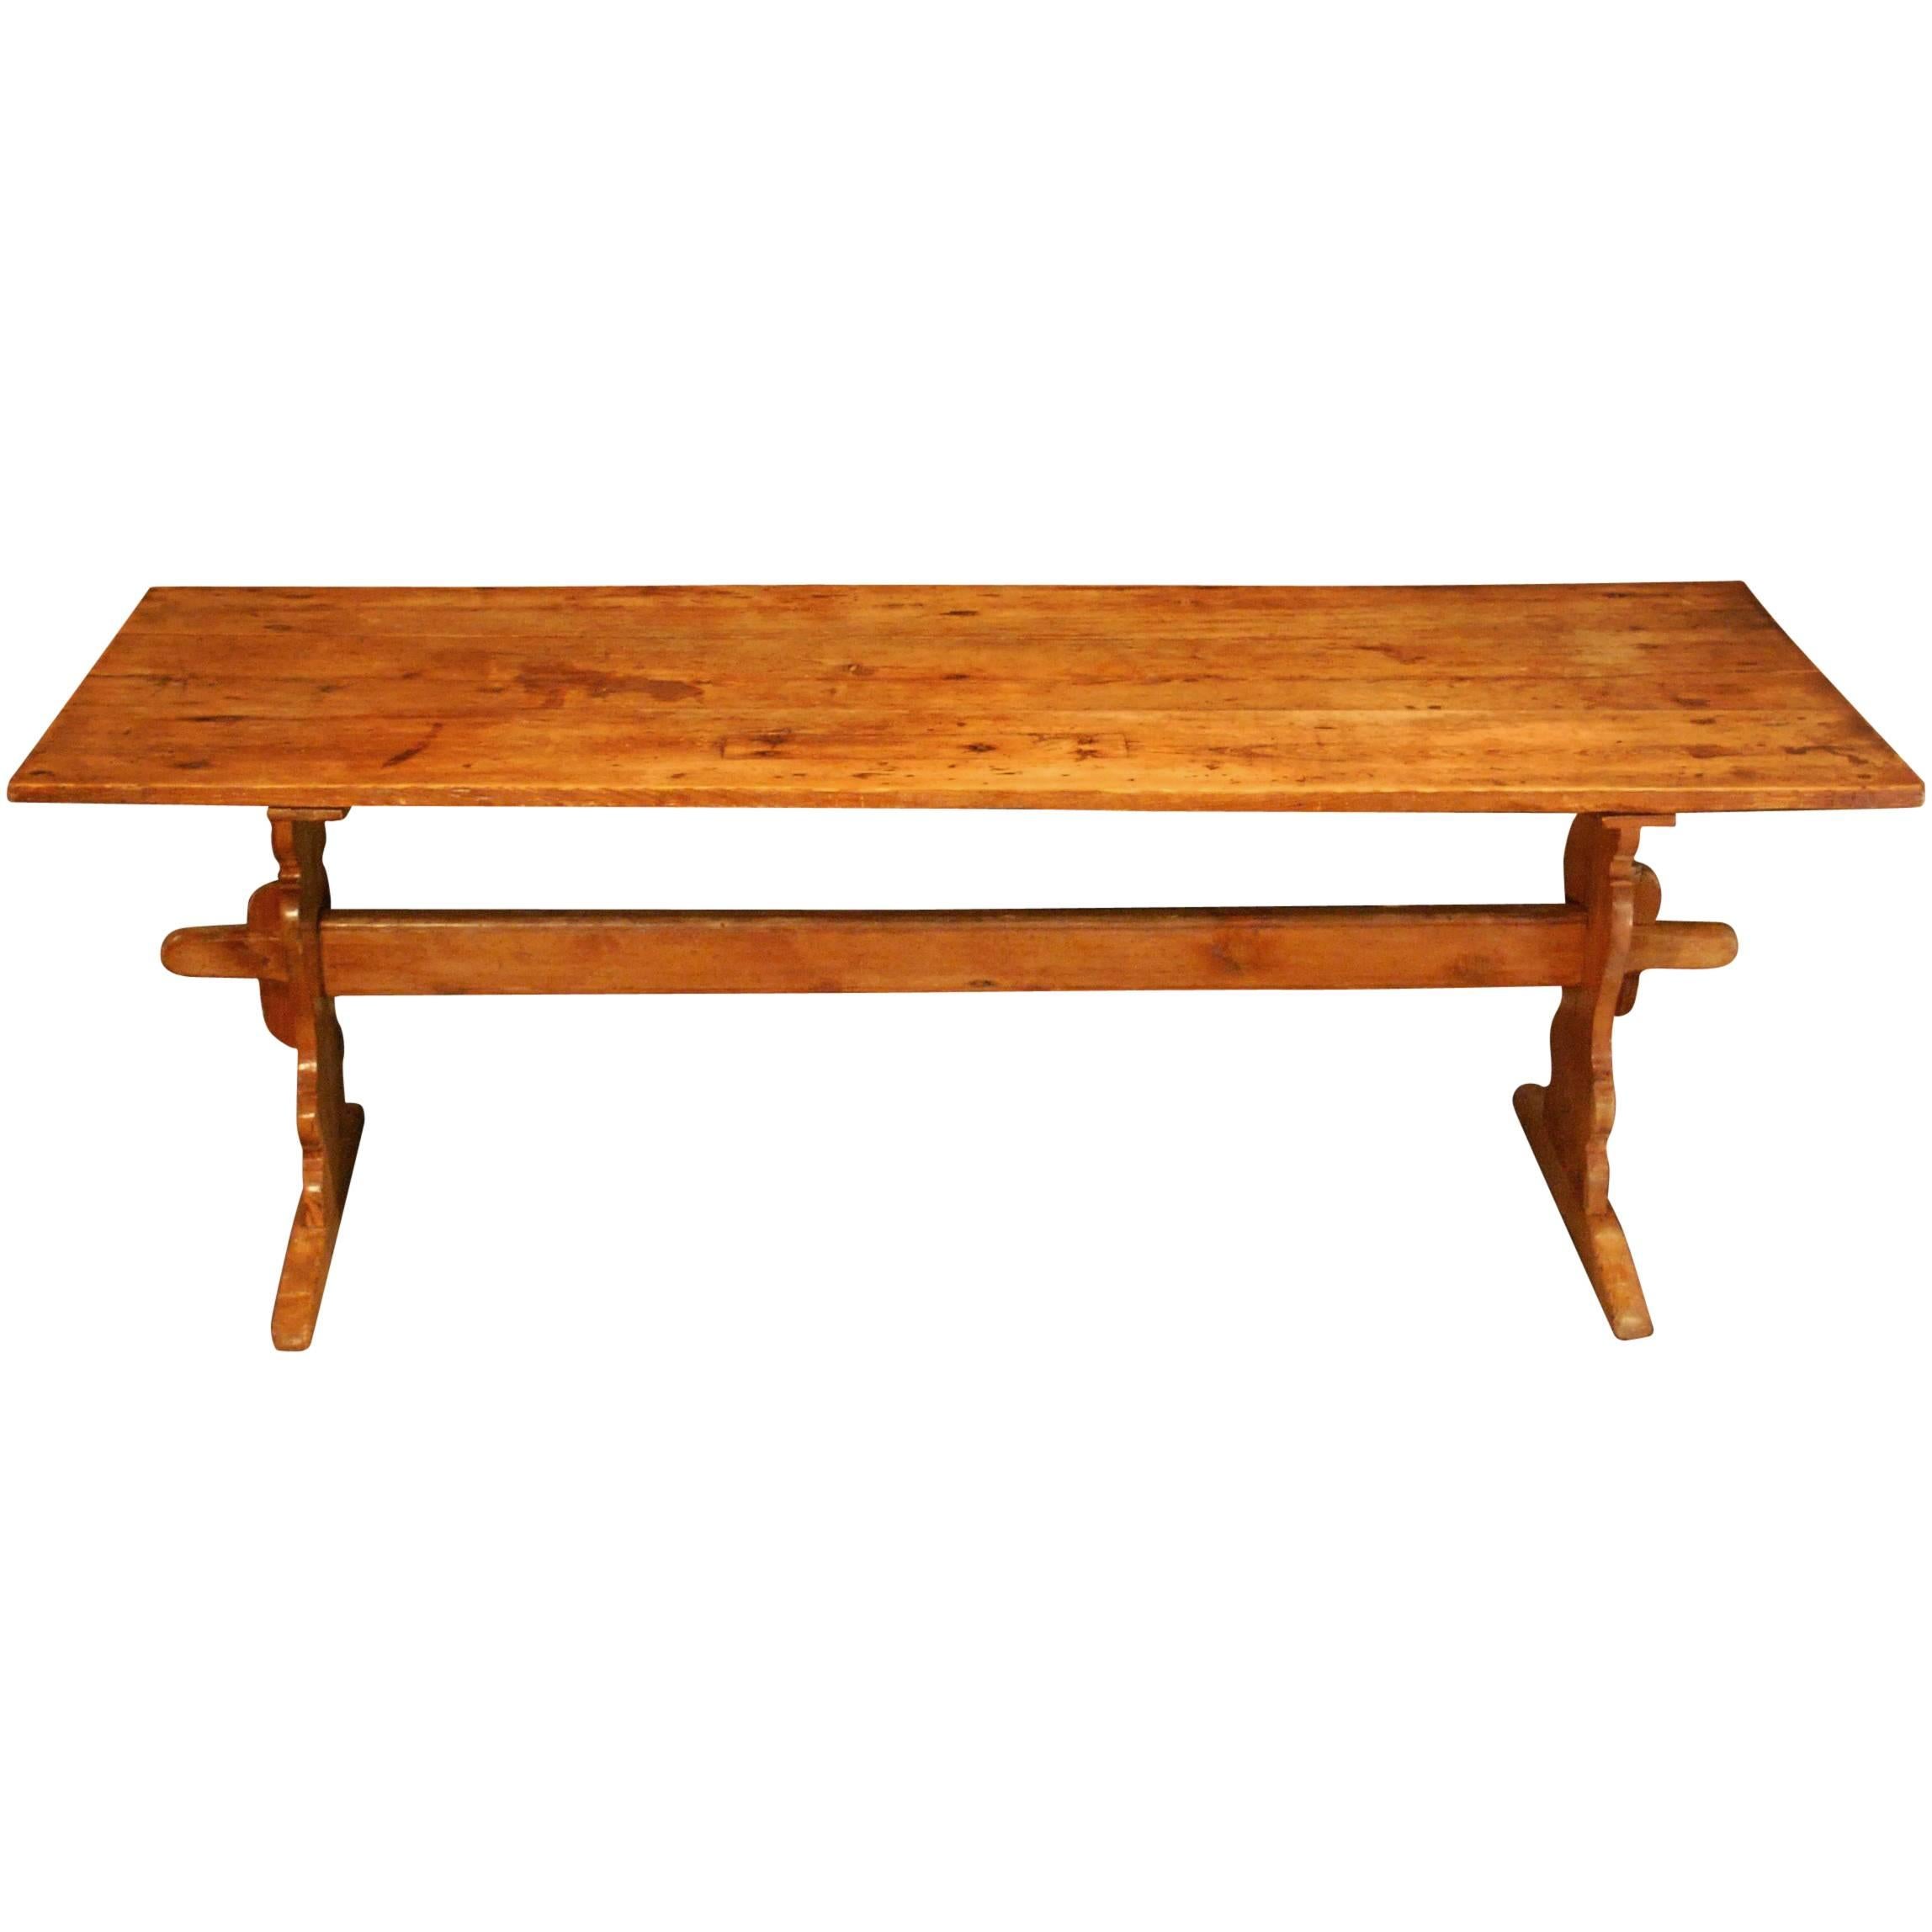 98629 Antique Swedish Trestle Table, circa 1840